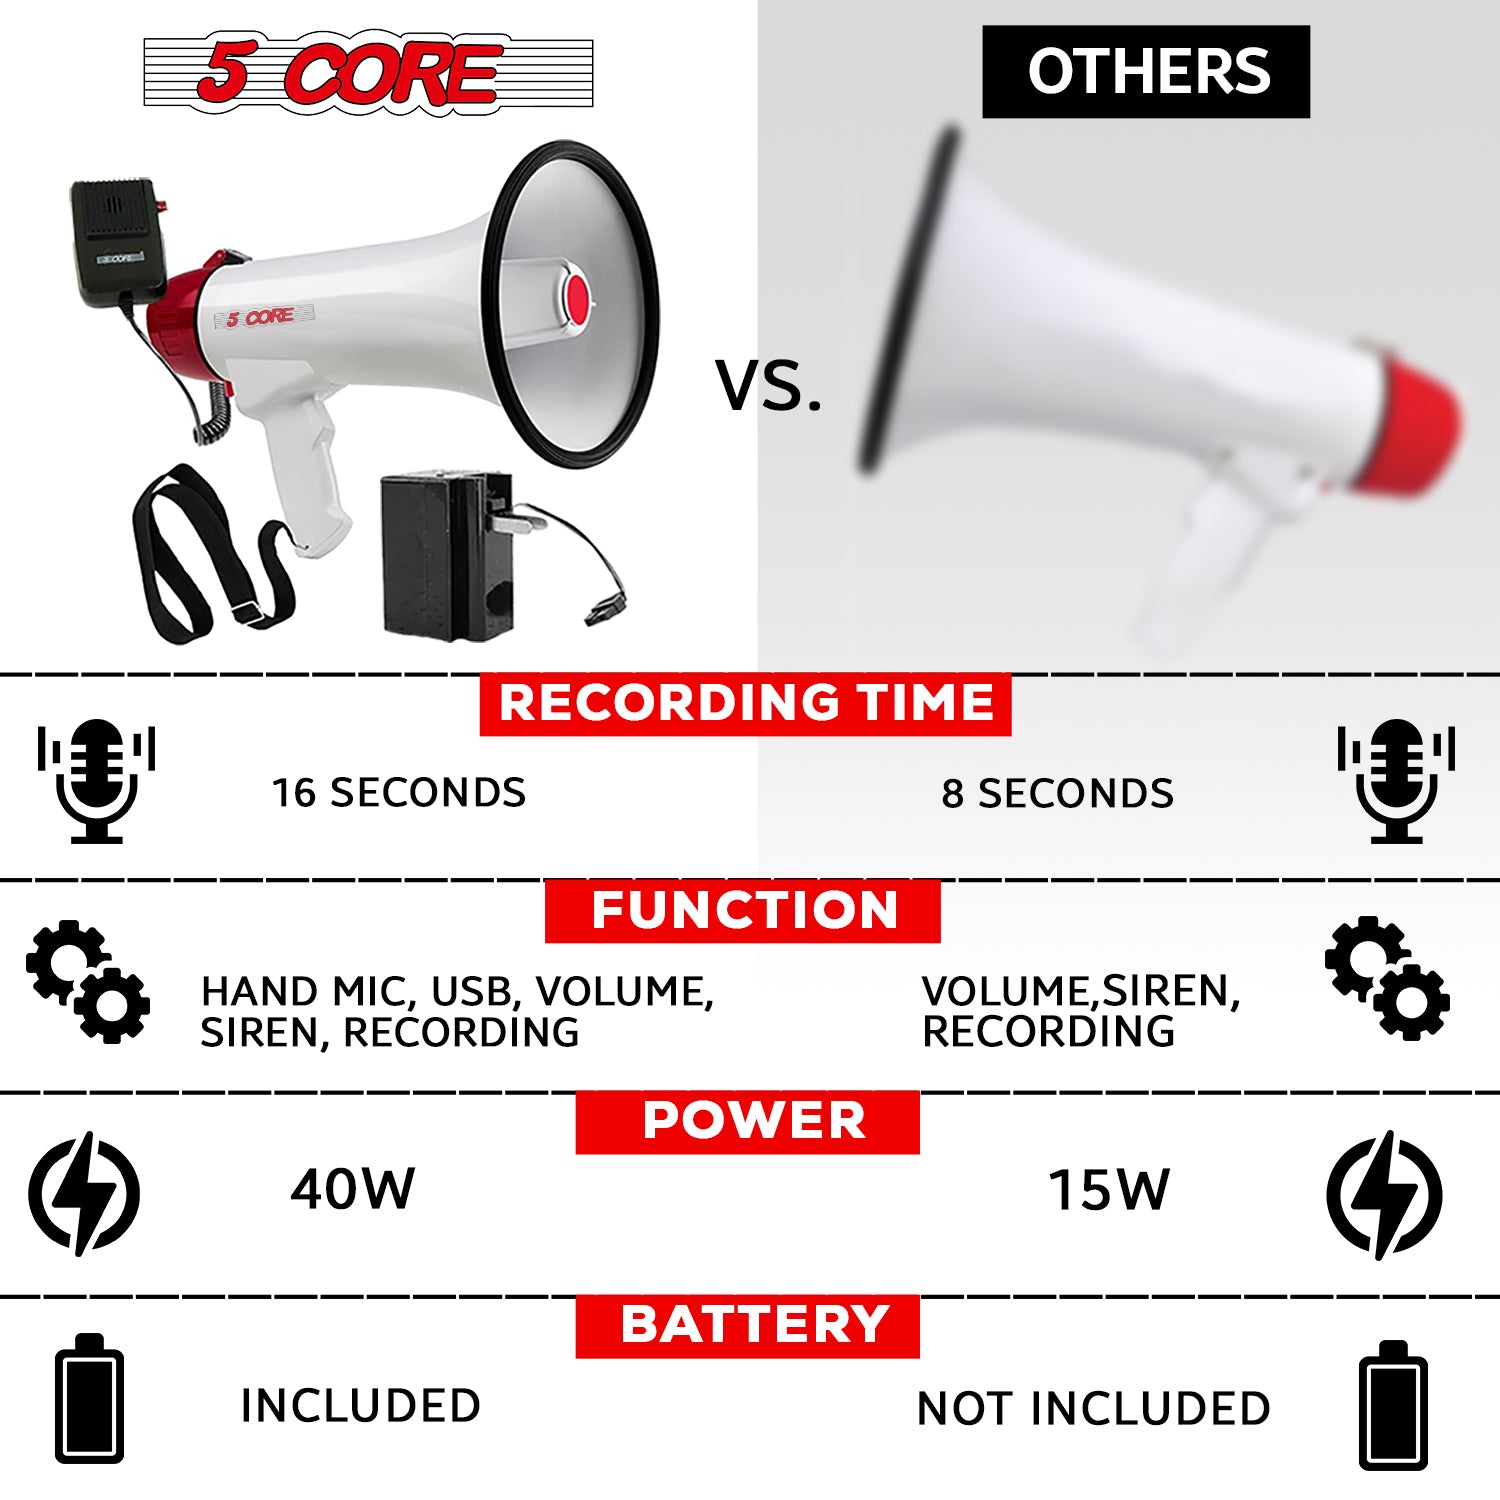 5 Core Megaphone 20 Watt 2 Pcs Bull Horn Loudspeaker Lightweight Megafono  Multi Function with Recording Siren Volume Control Indoor & Outdoor Sports  Emergency Response 20R-USB WoB 2Pcs